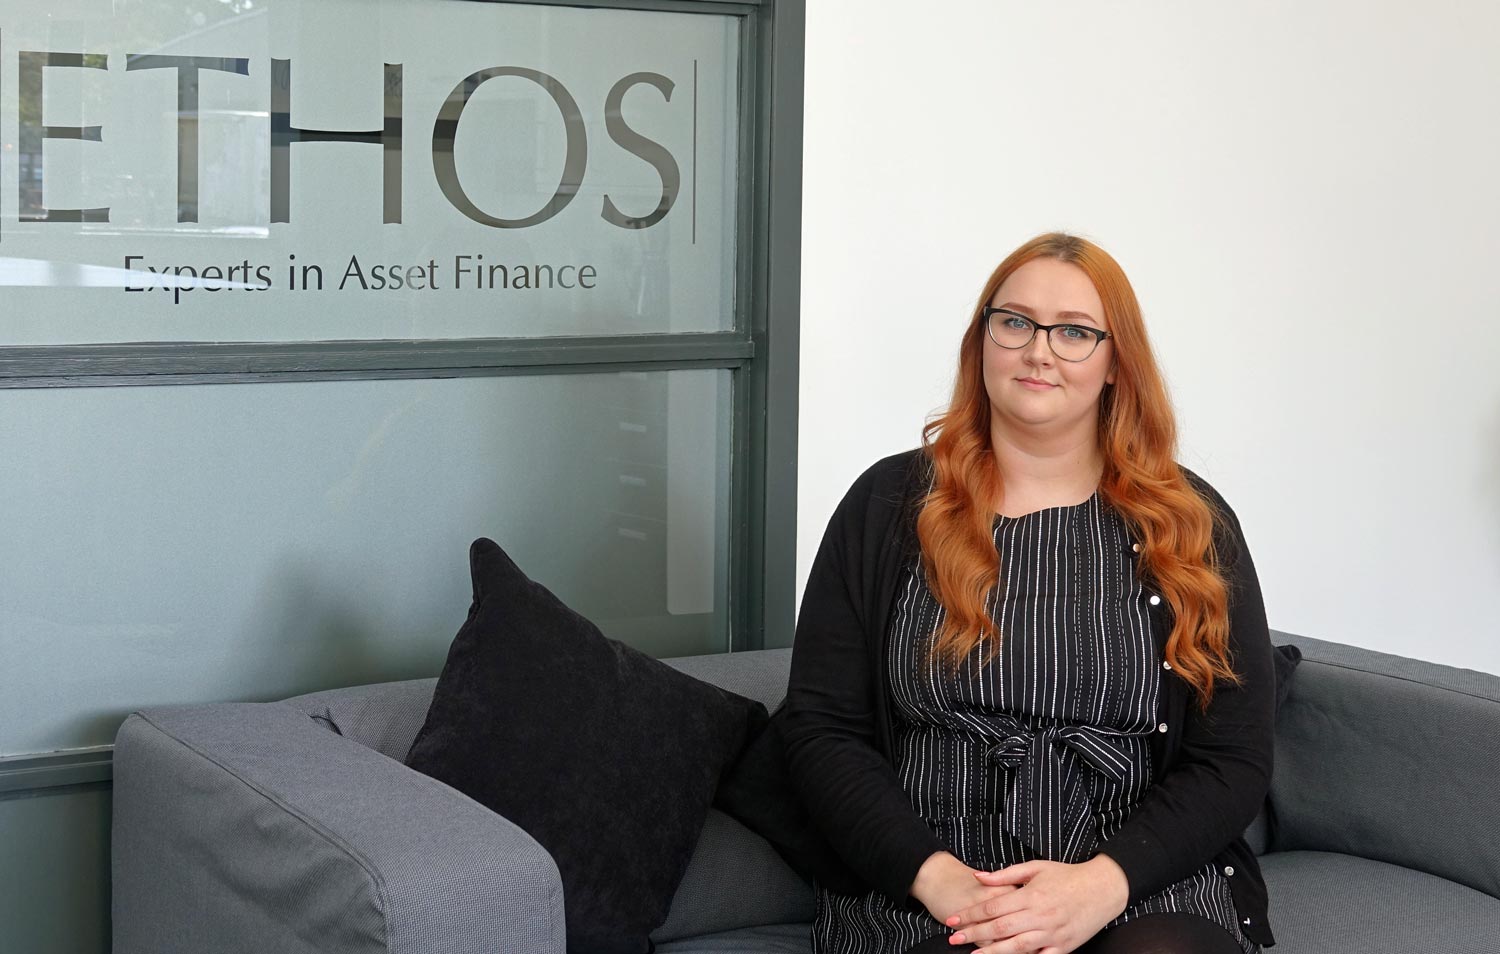 Rachel Anderson, Ethos Asset Finance’s new Sales Administrator